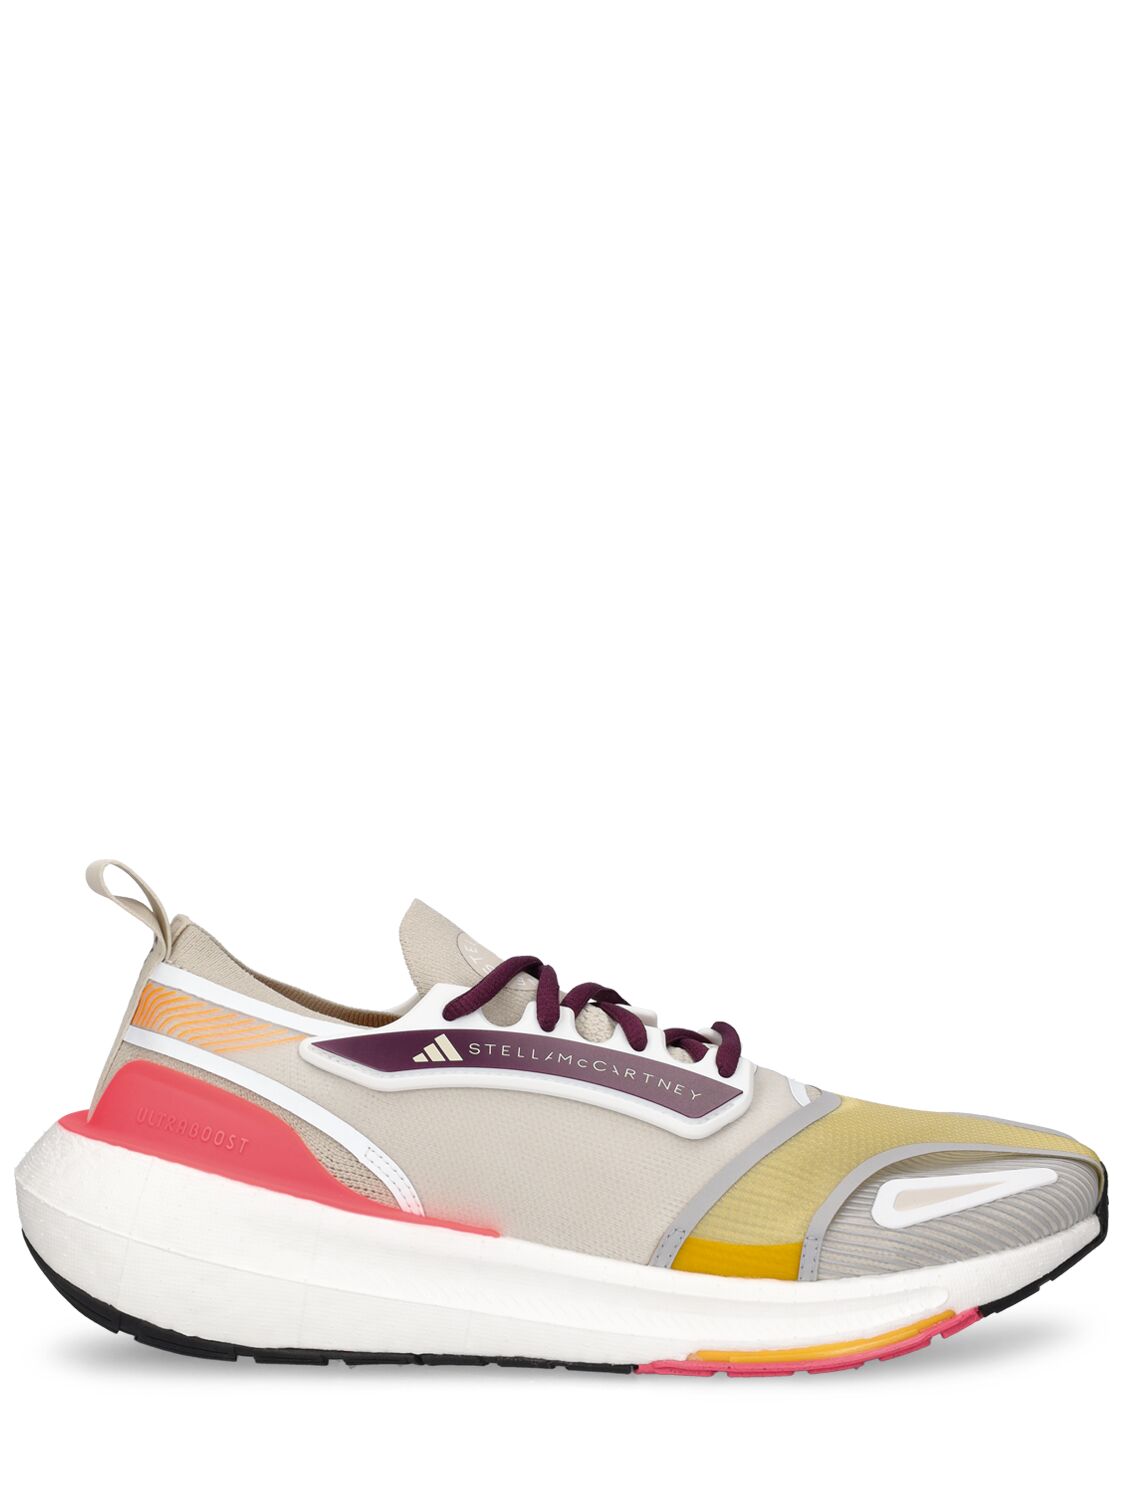 Adidas X Stella McCartney Ub23 Lower Footprint Sneakers